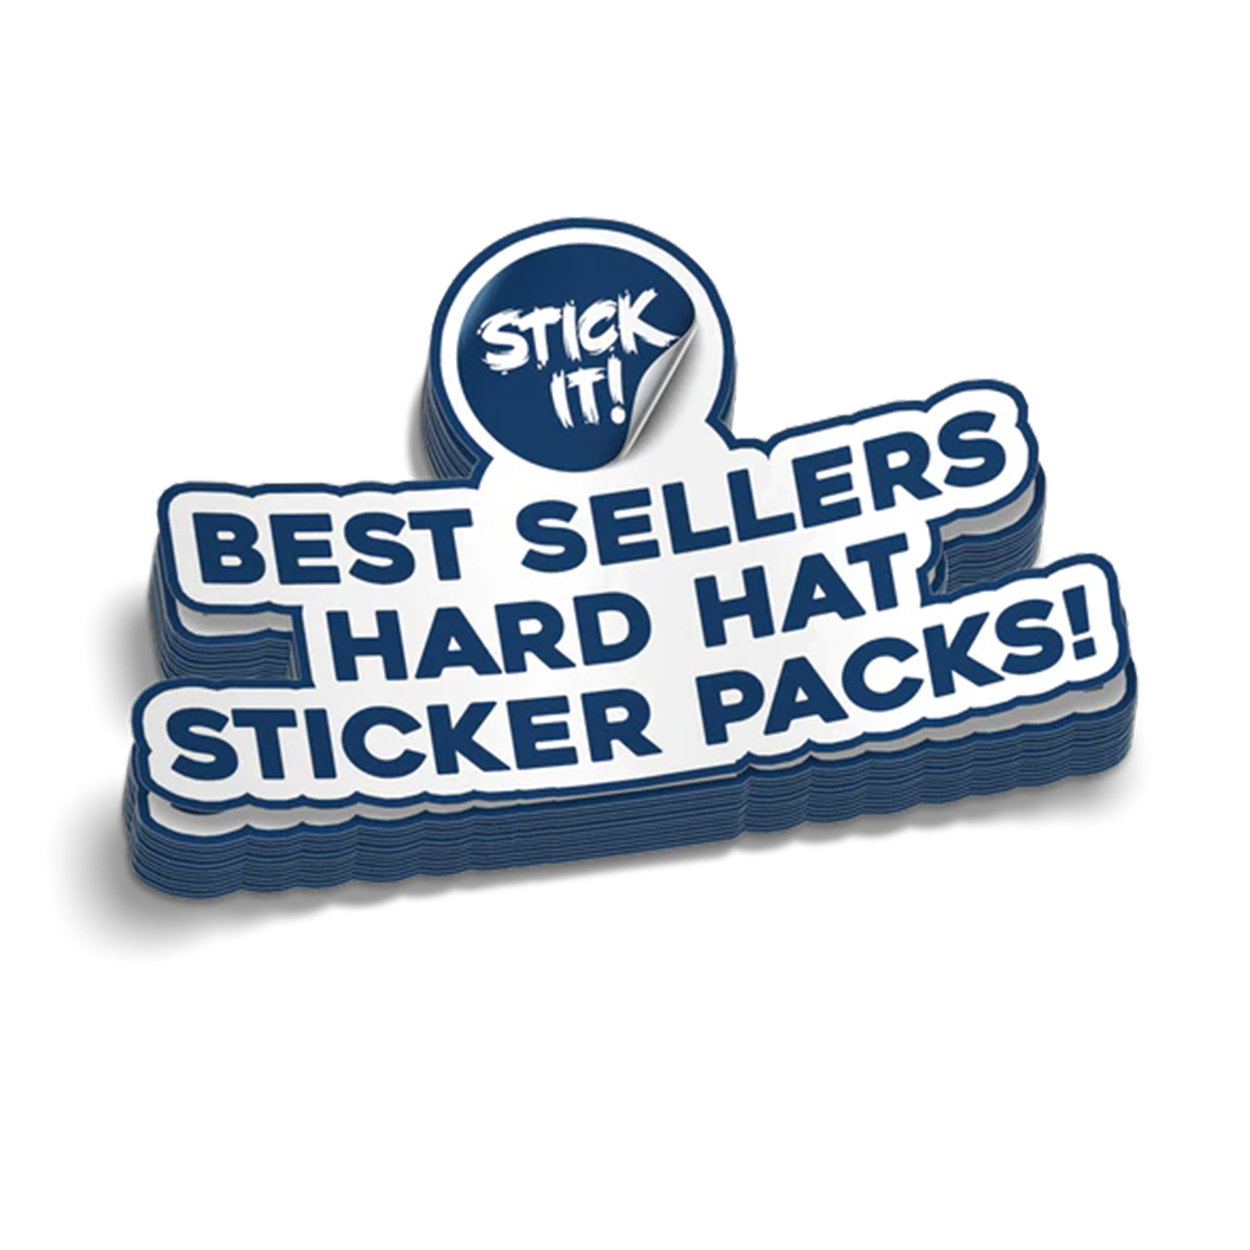 Best Sellers - Hard Hat Sticker Packs